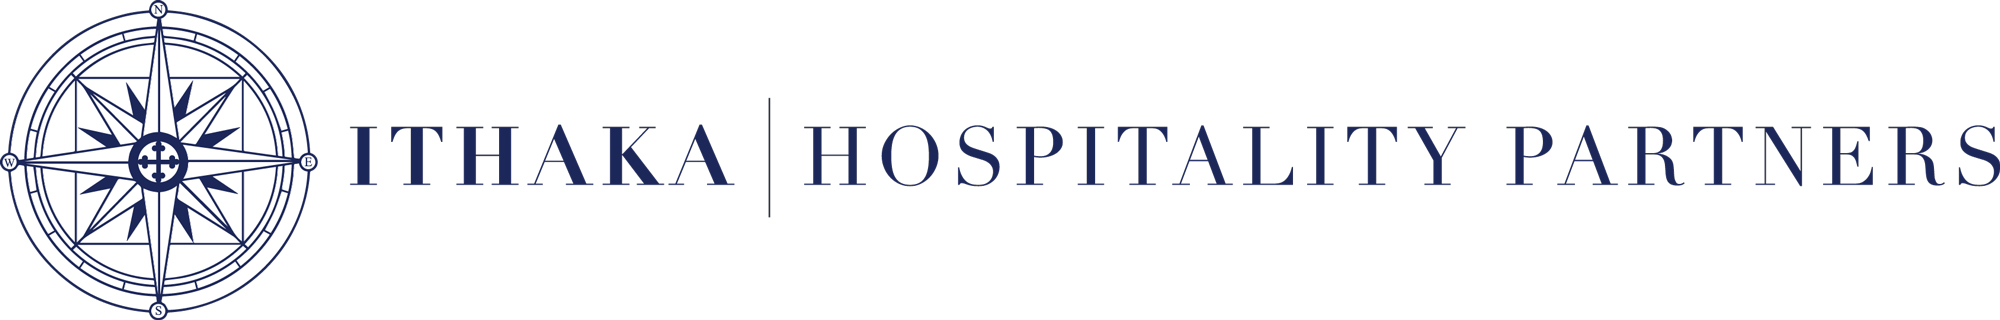 Ithaka Hospitality Partners Logo